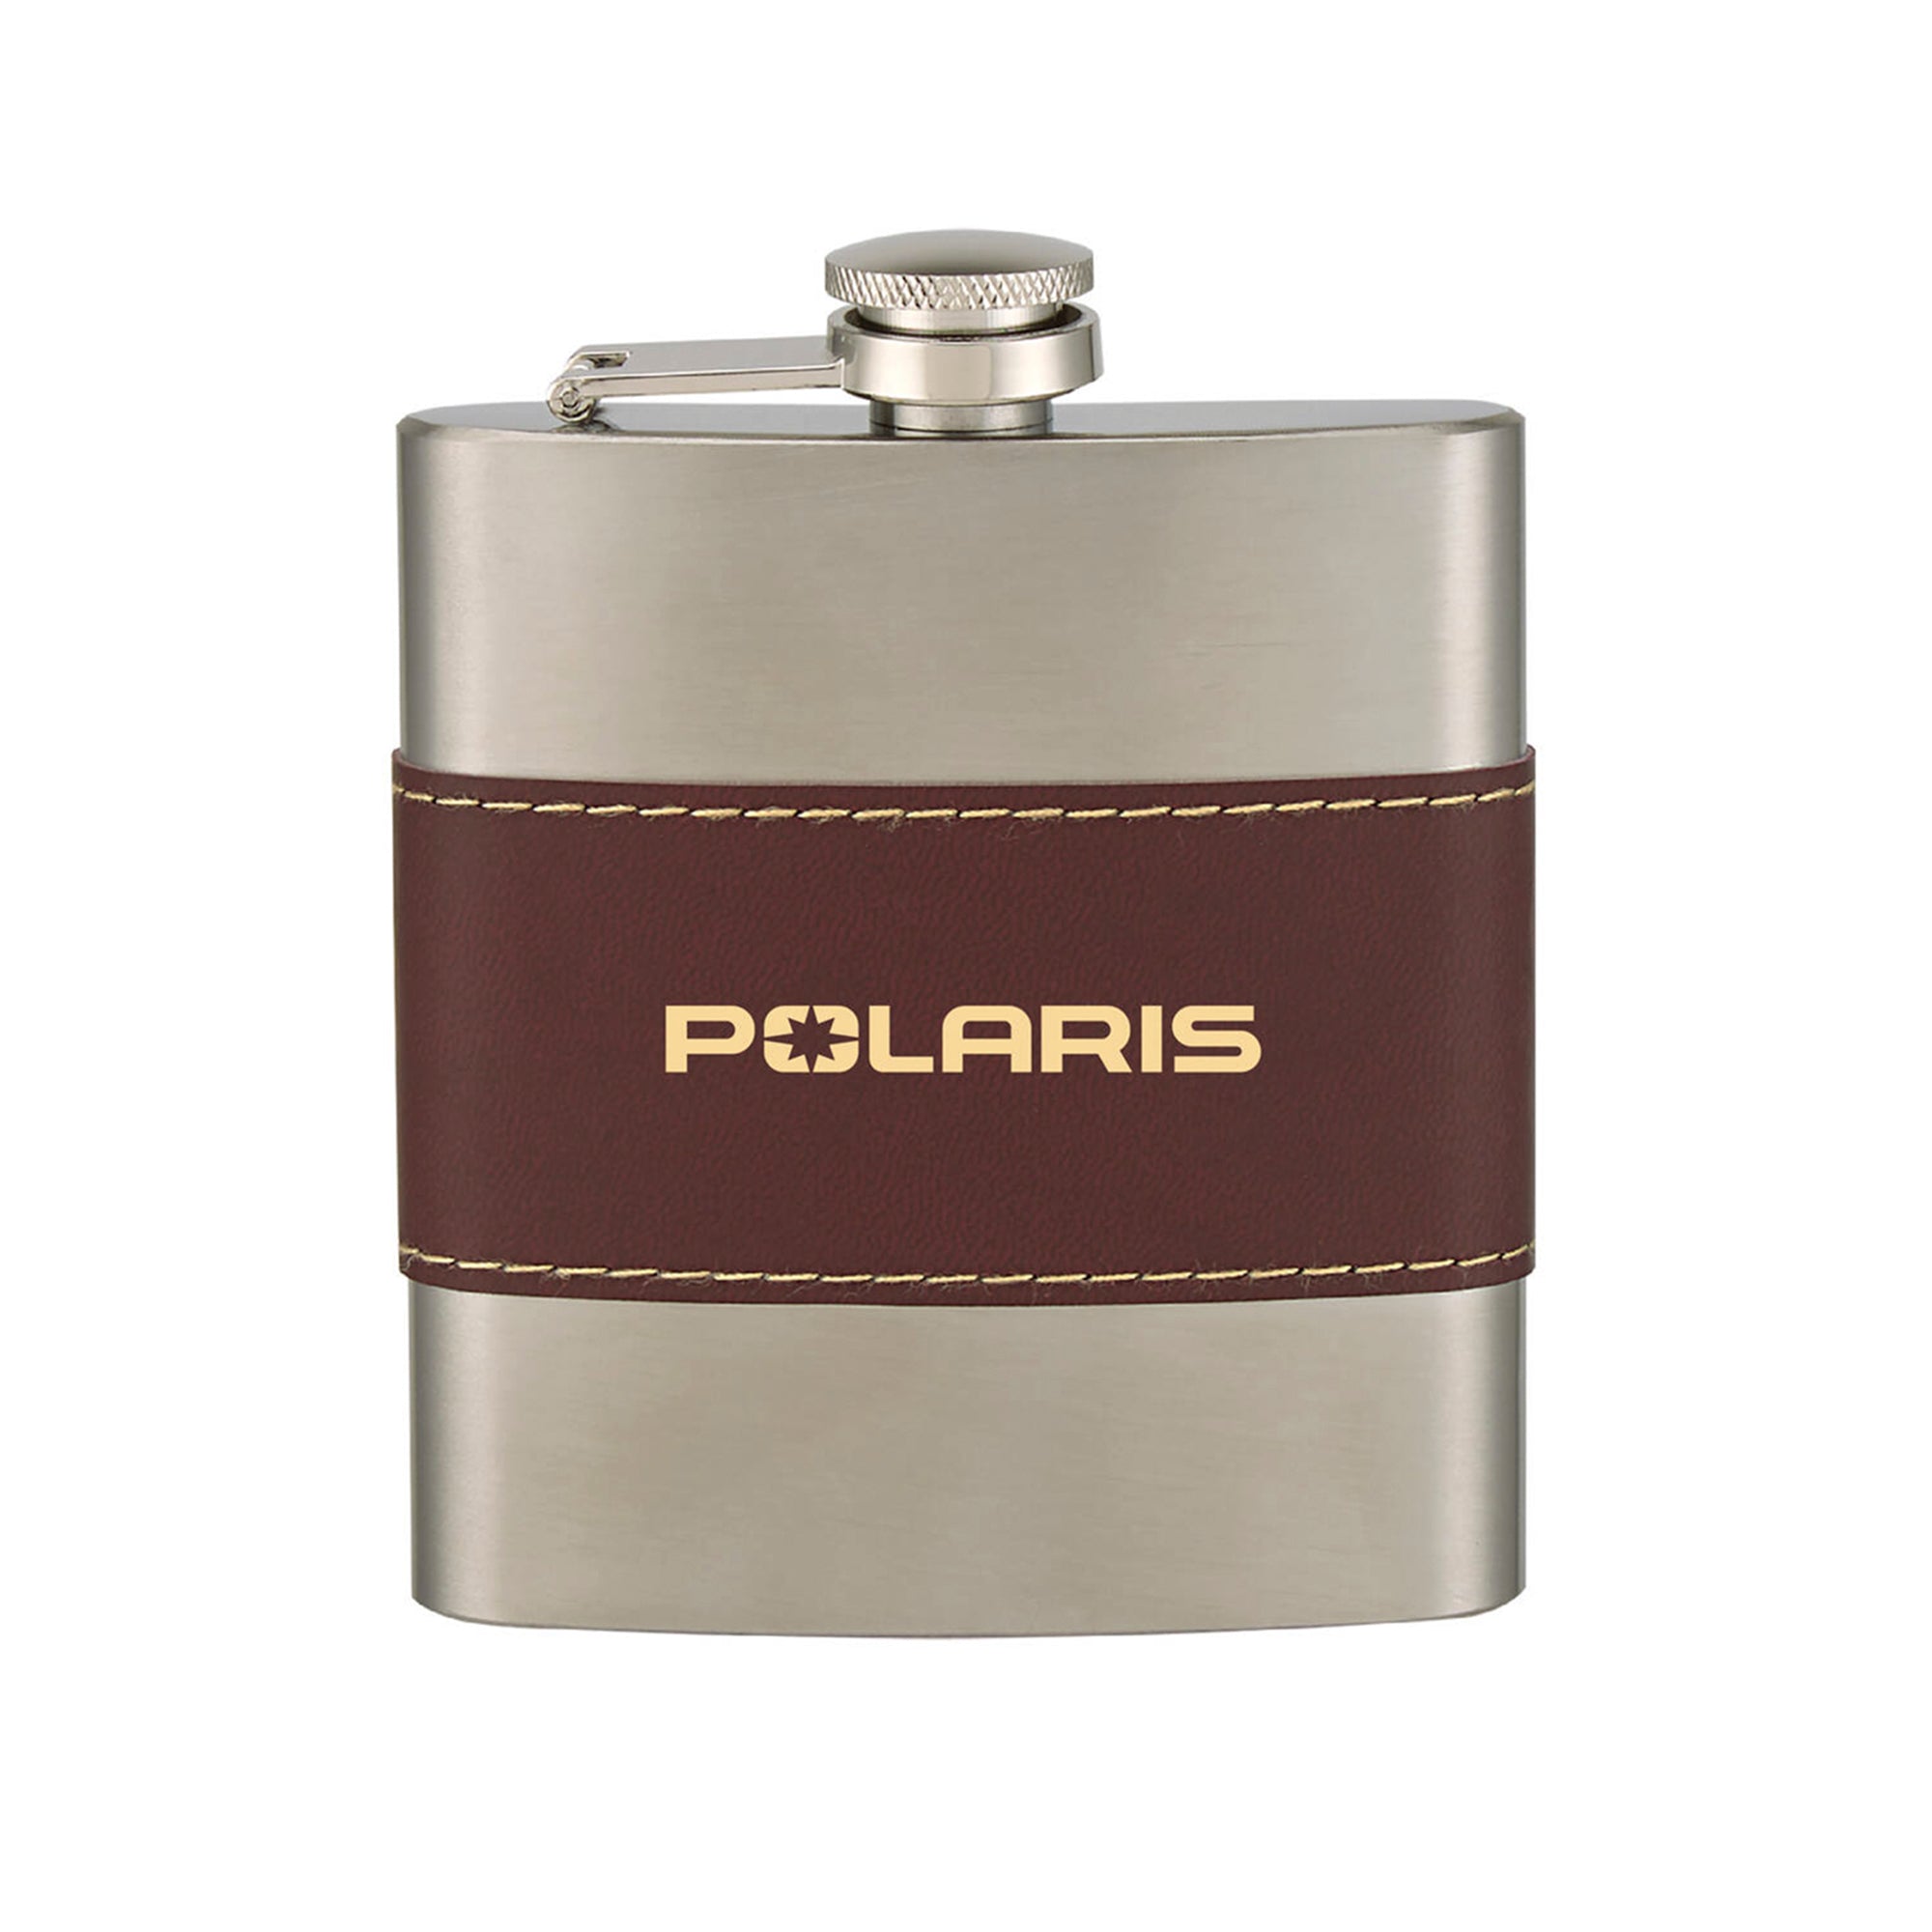 Polaris 2860812 Flask